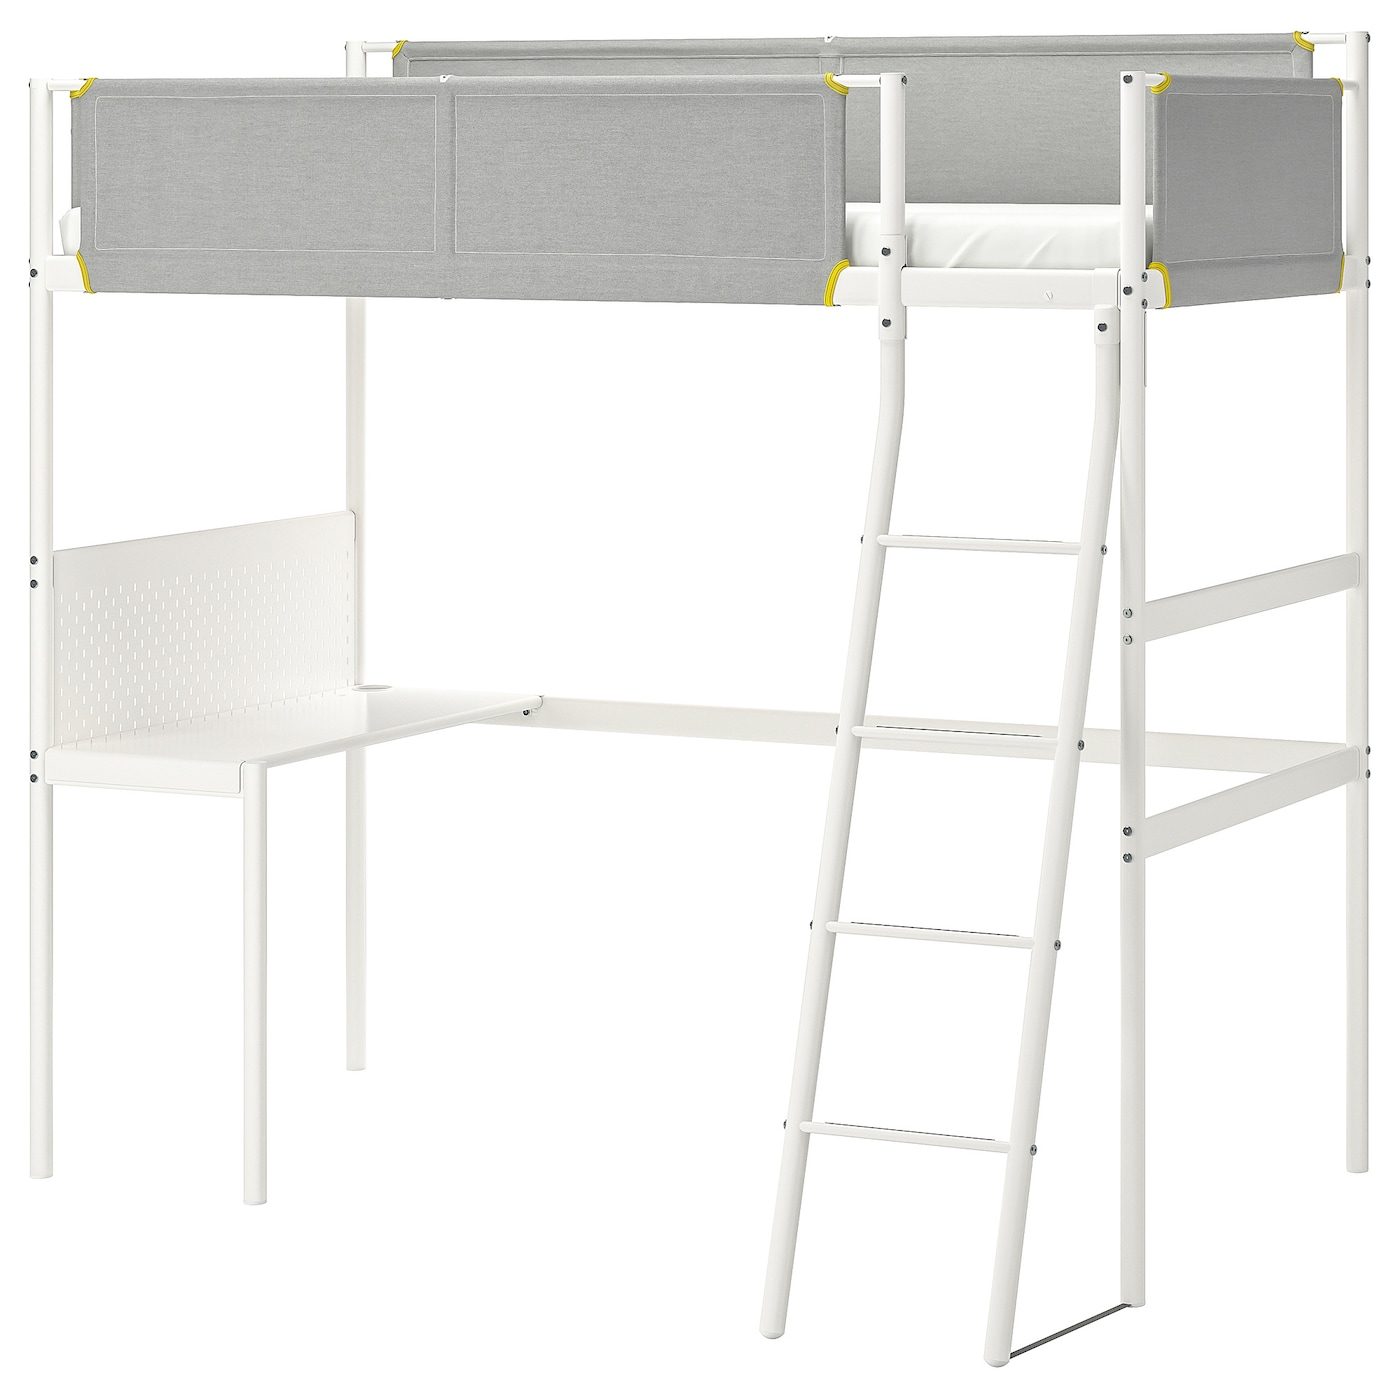 Vitval Loft Bed Frame With Desk Top Vitval White Light Gray Ikea United States Ikeapedia